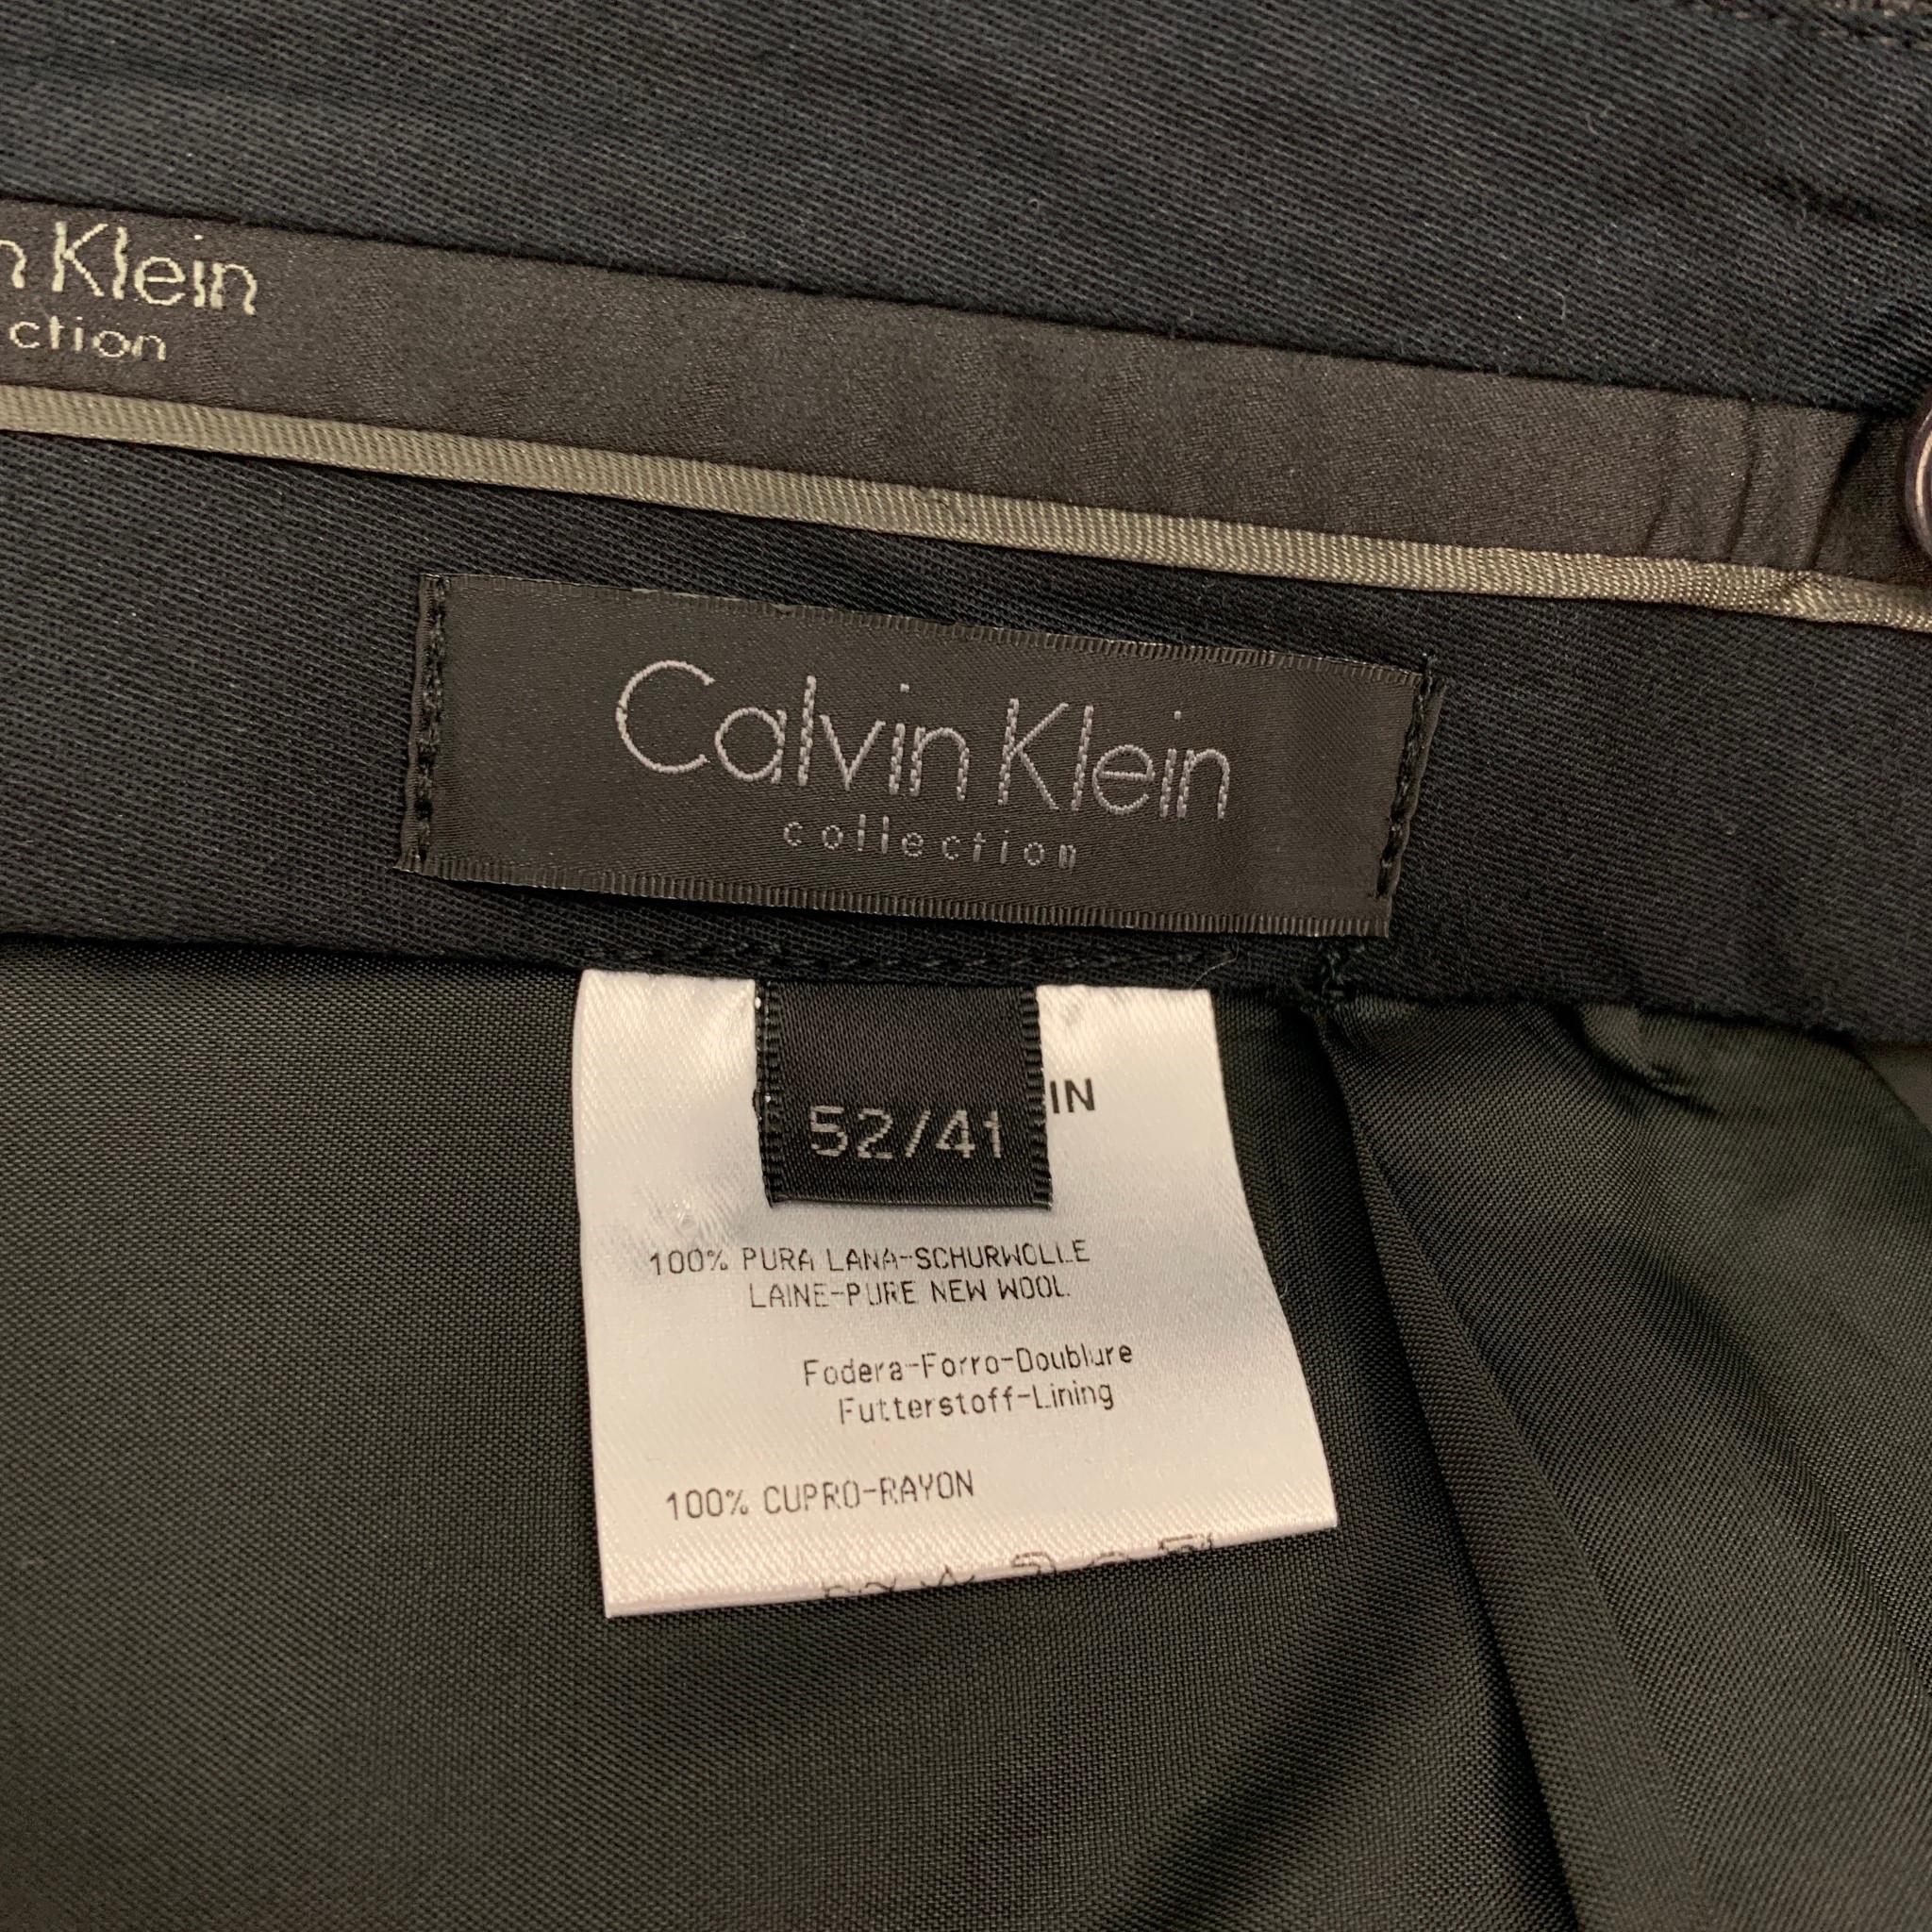 CALVIN KLEIN COLLECTION Size 42 Charcoal Wool Notch Lapel Suit 5